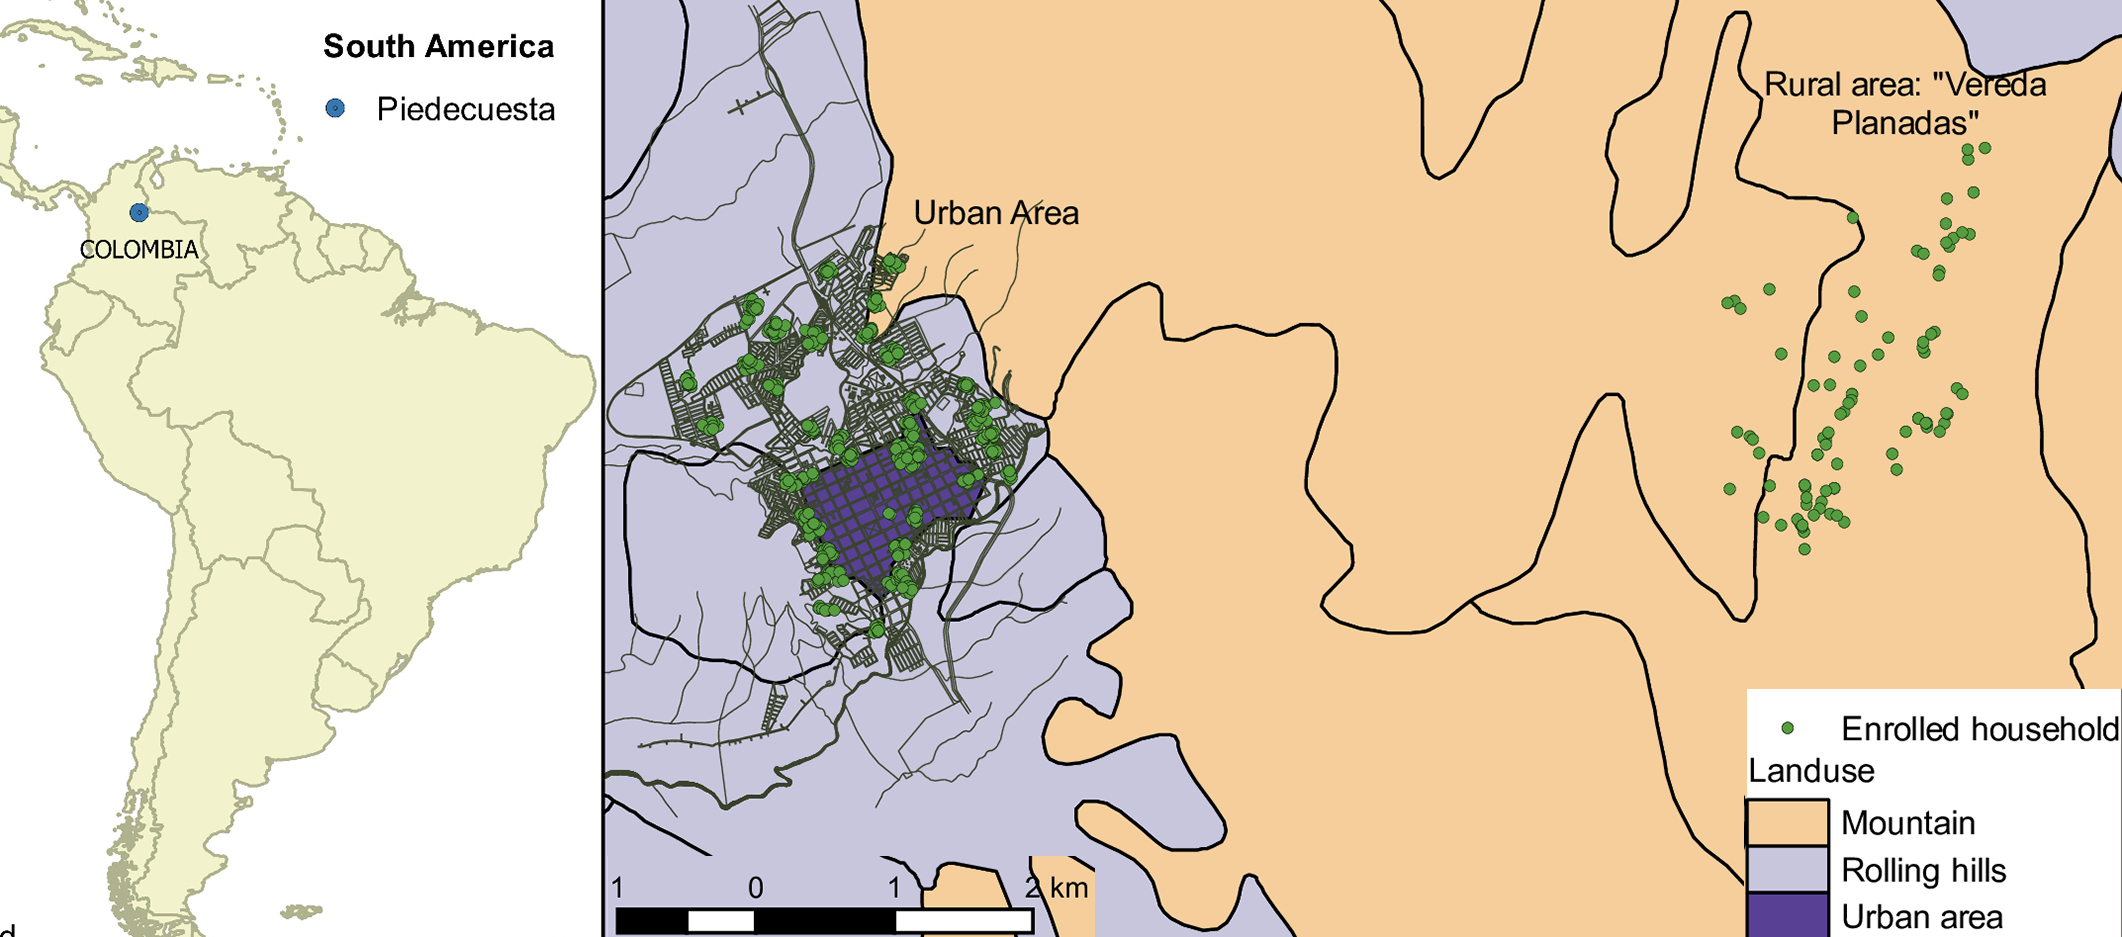  Location of enrolled households in Piedecuesta, Colombia